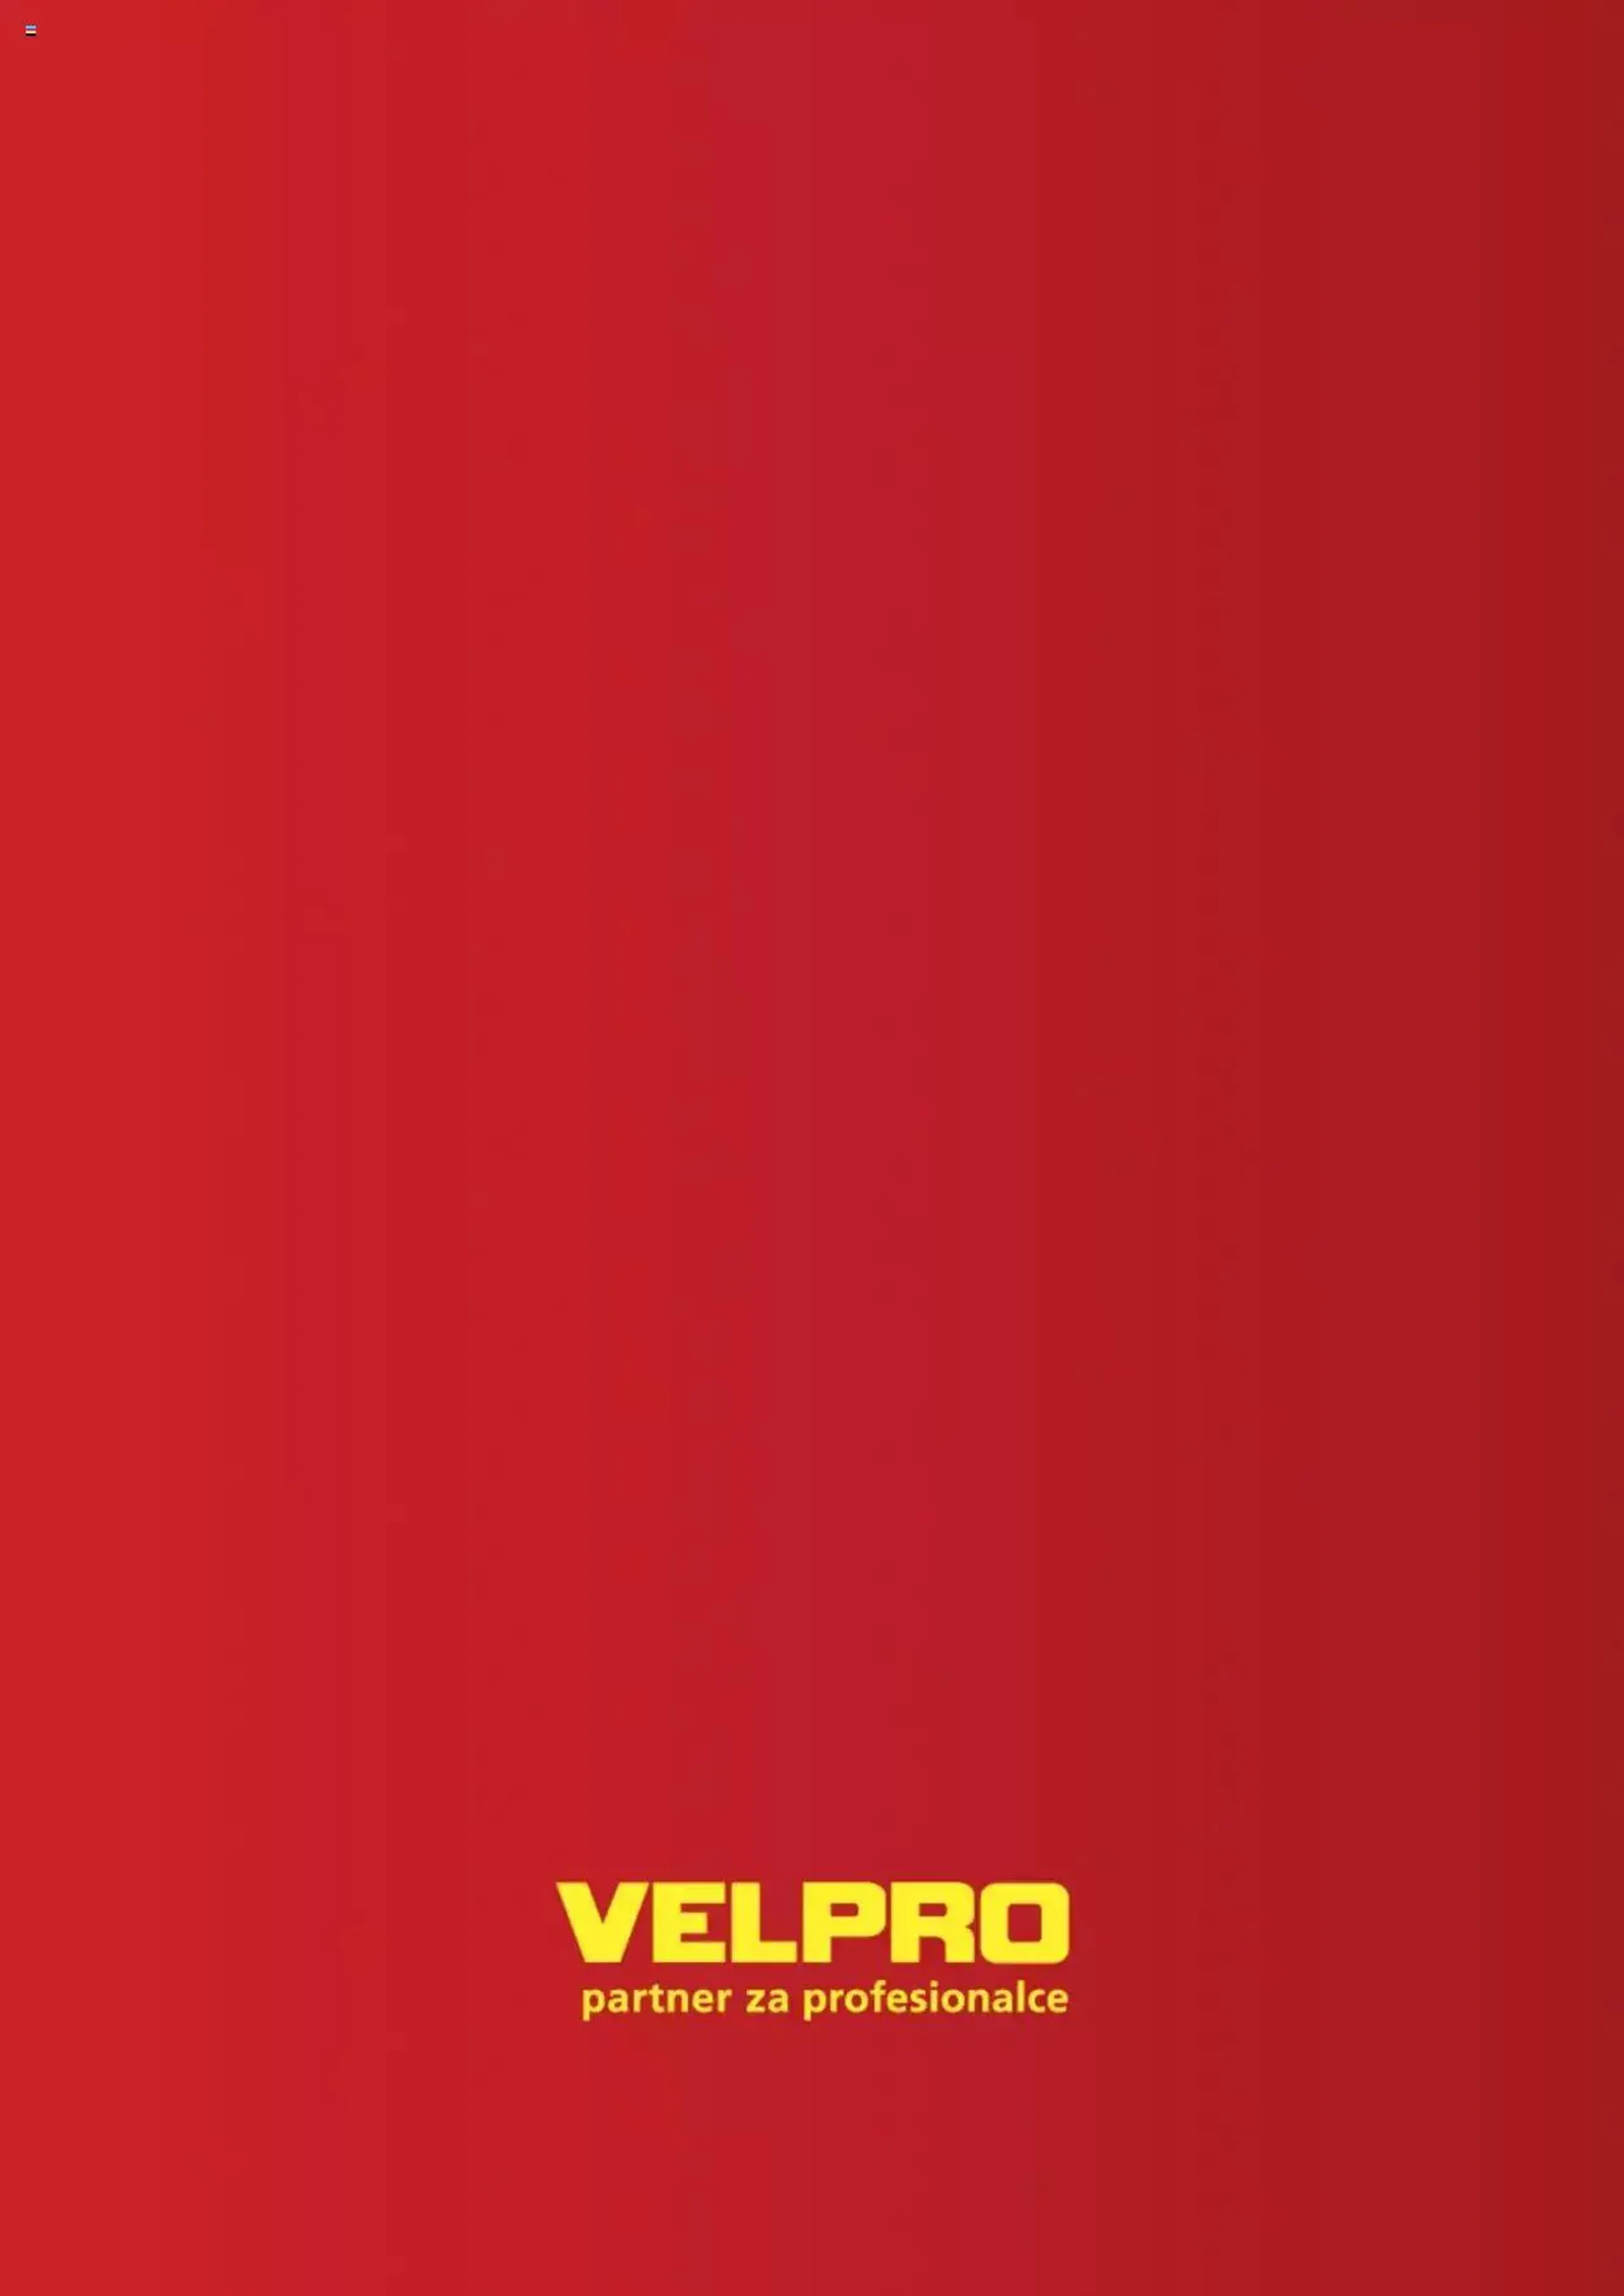 Velpro - Katalog naših robnih marki - 79